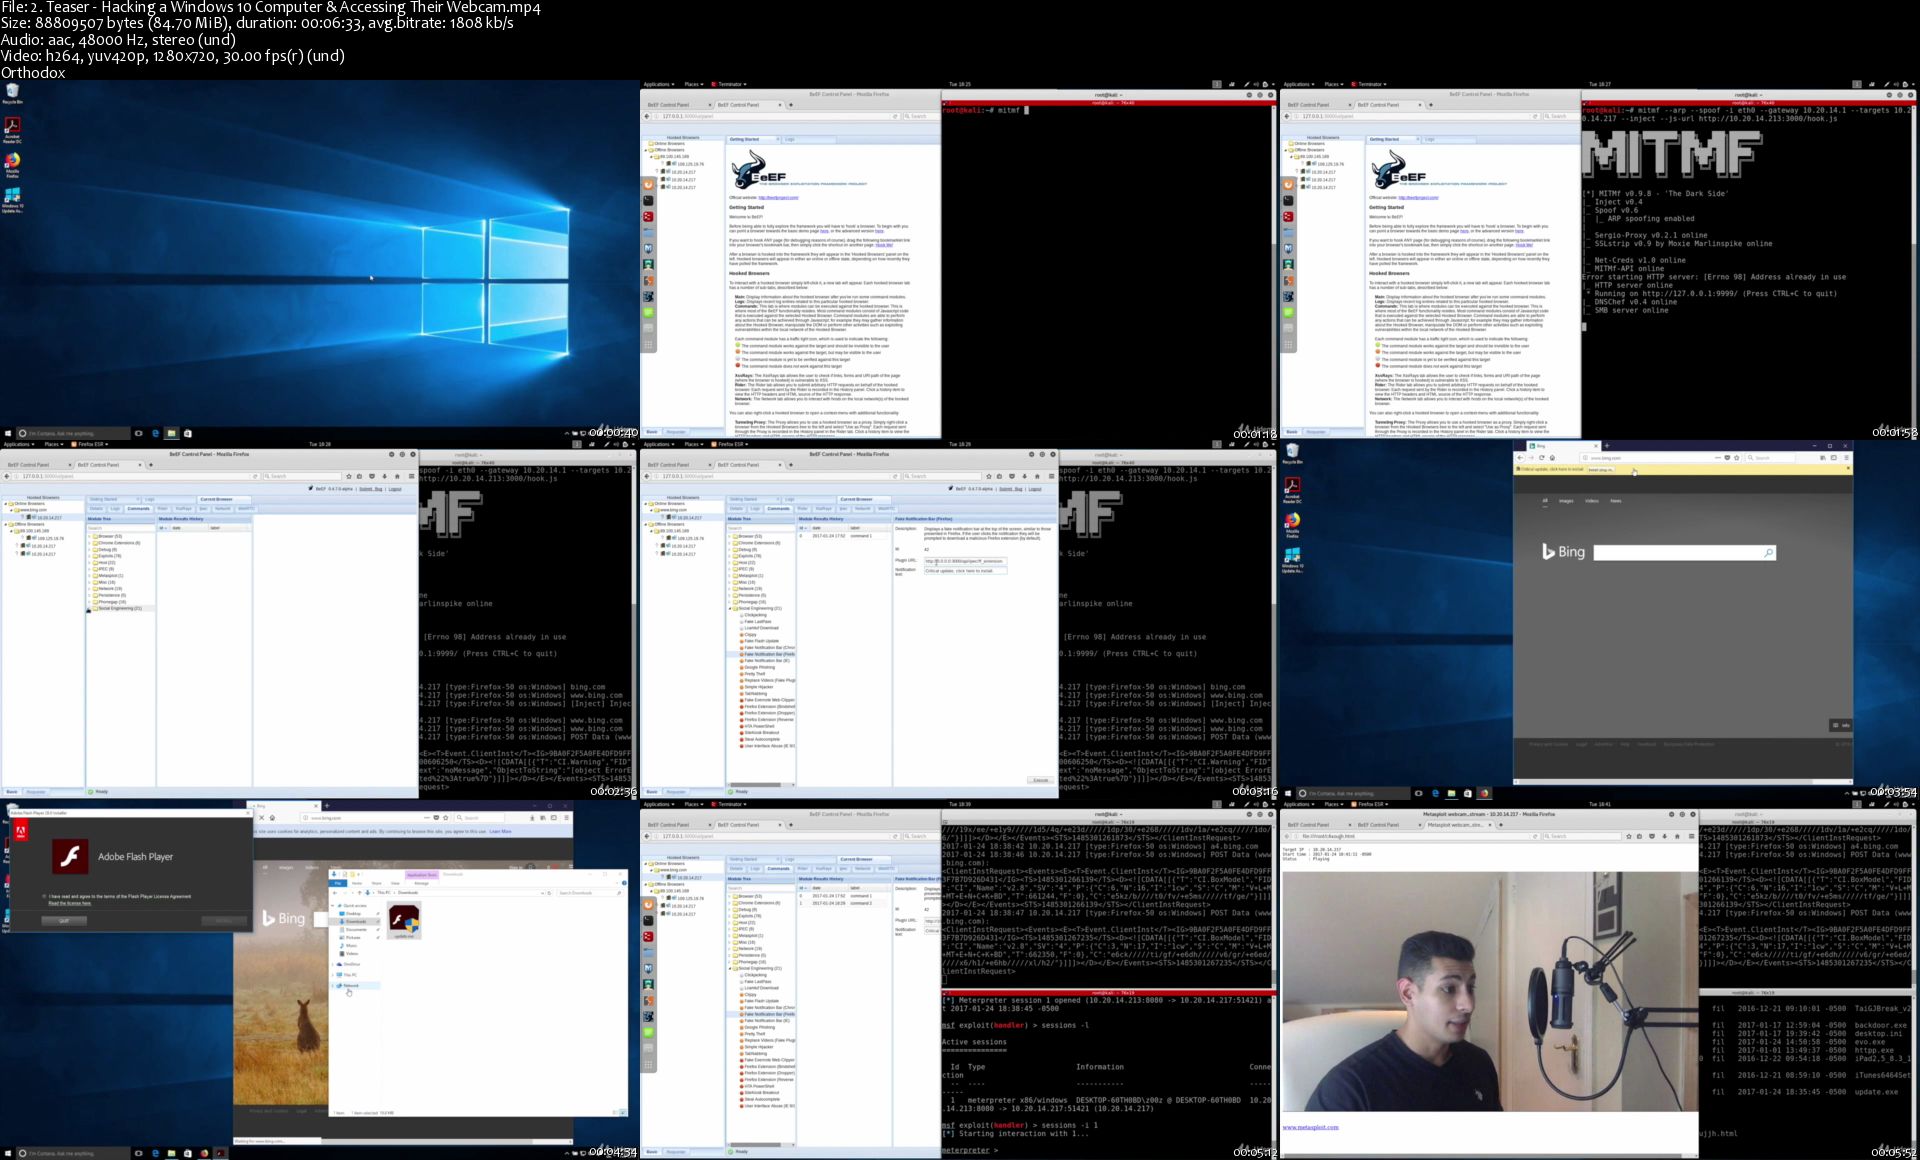 2-Teaser-Hacking-a-Windows-10-Computer-Accessing-Their-Webc.jpg